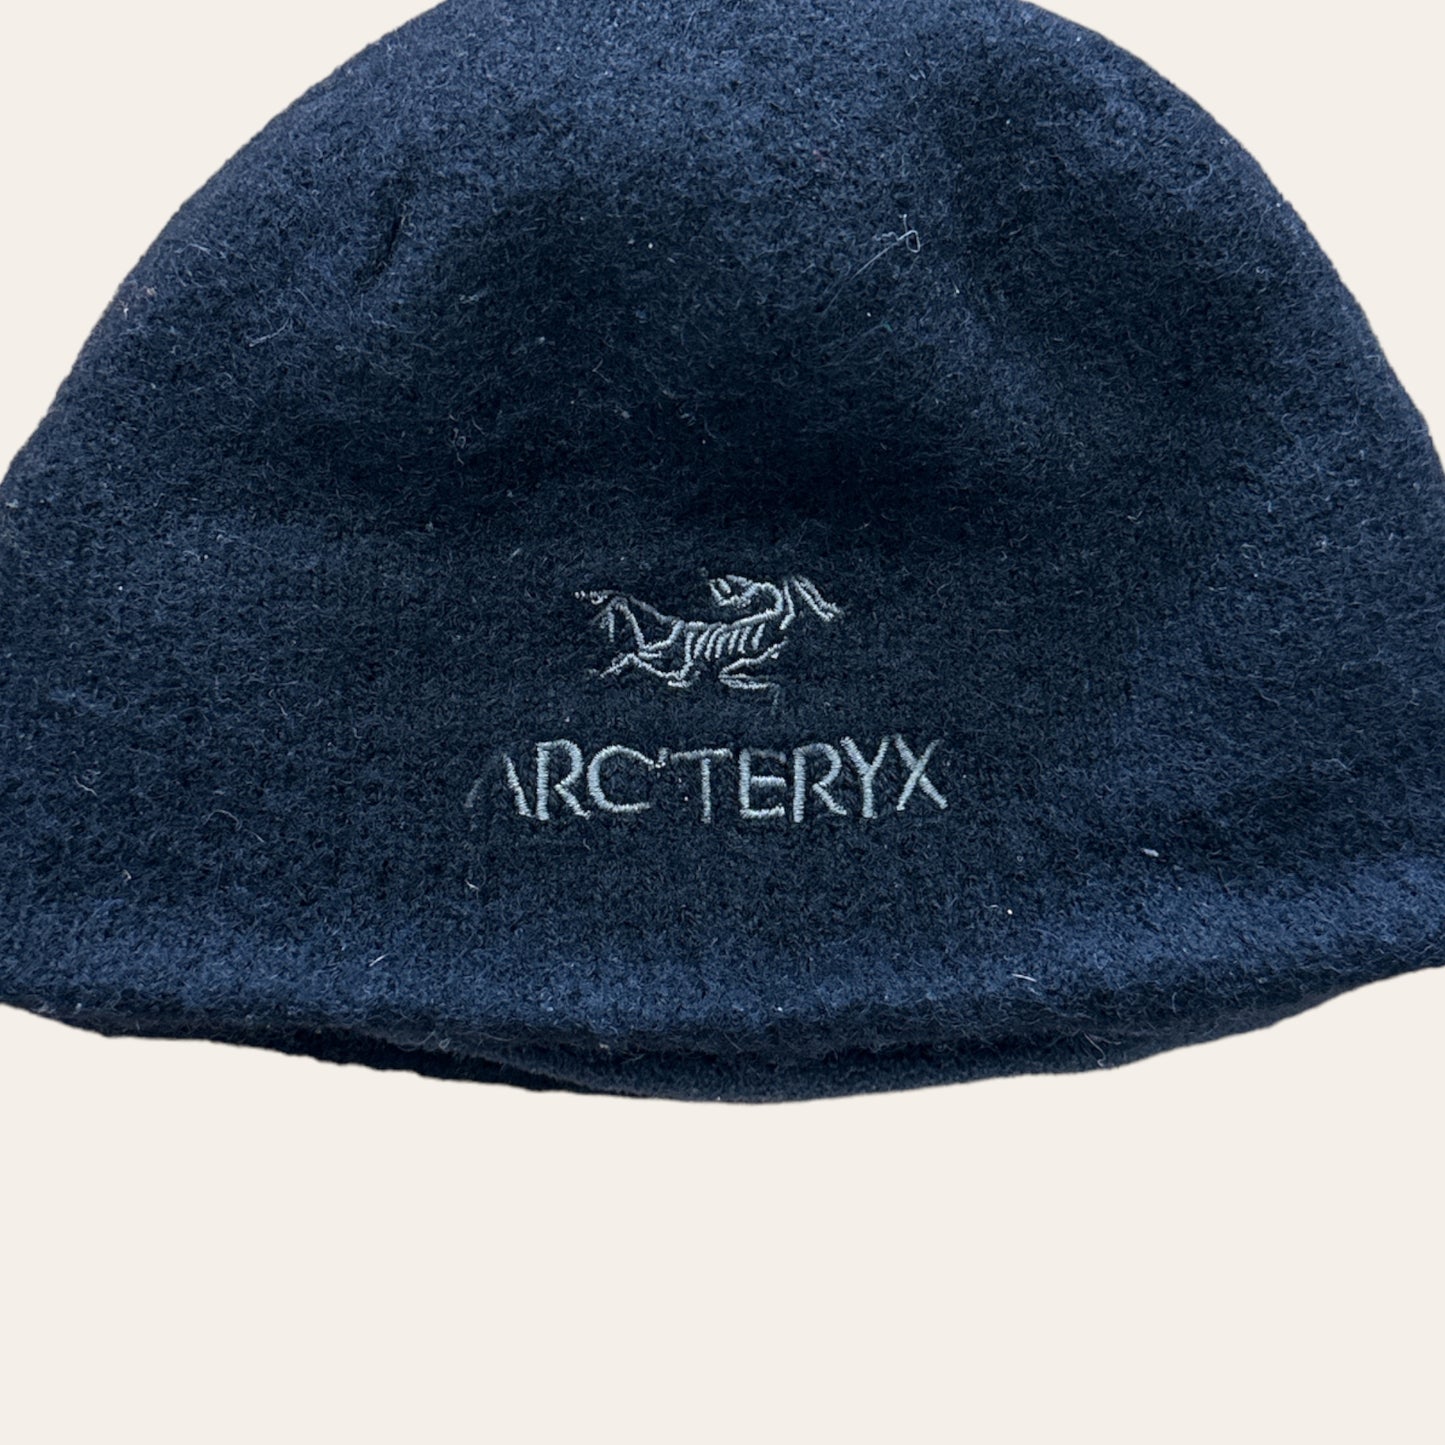 Arcteryx Wool Toque